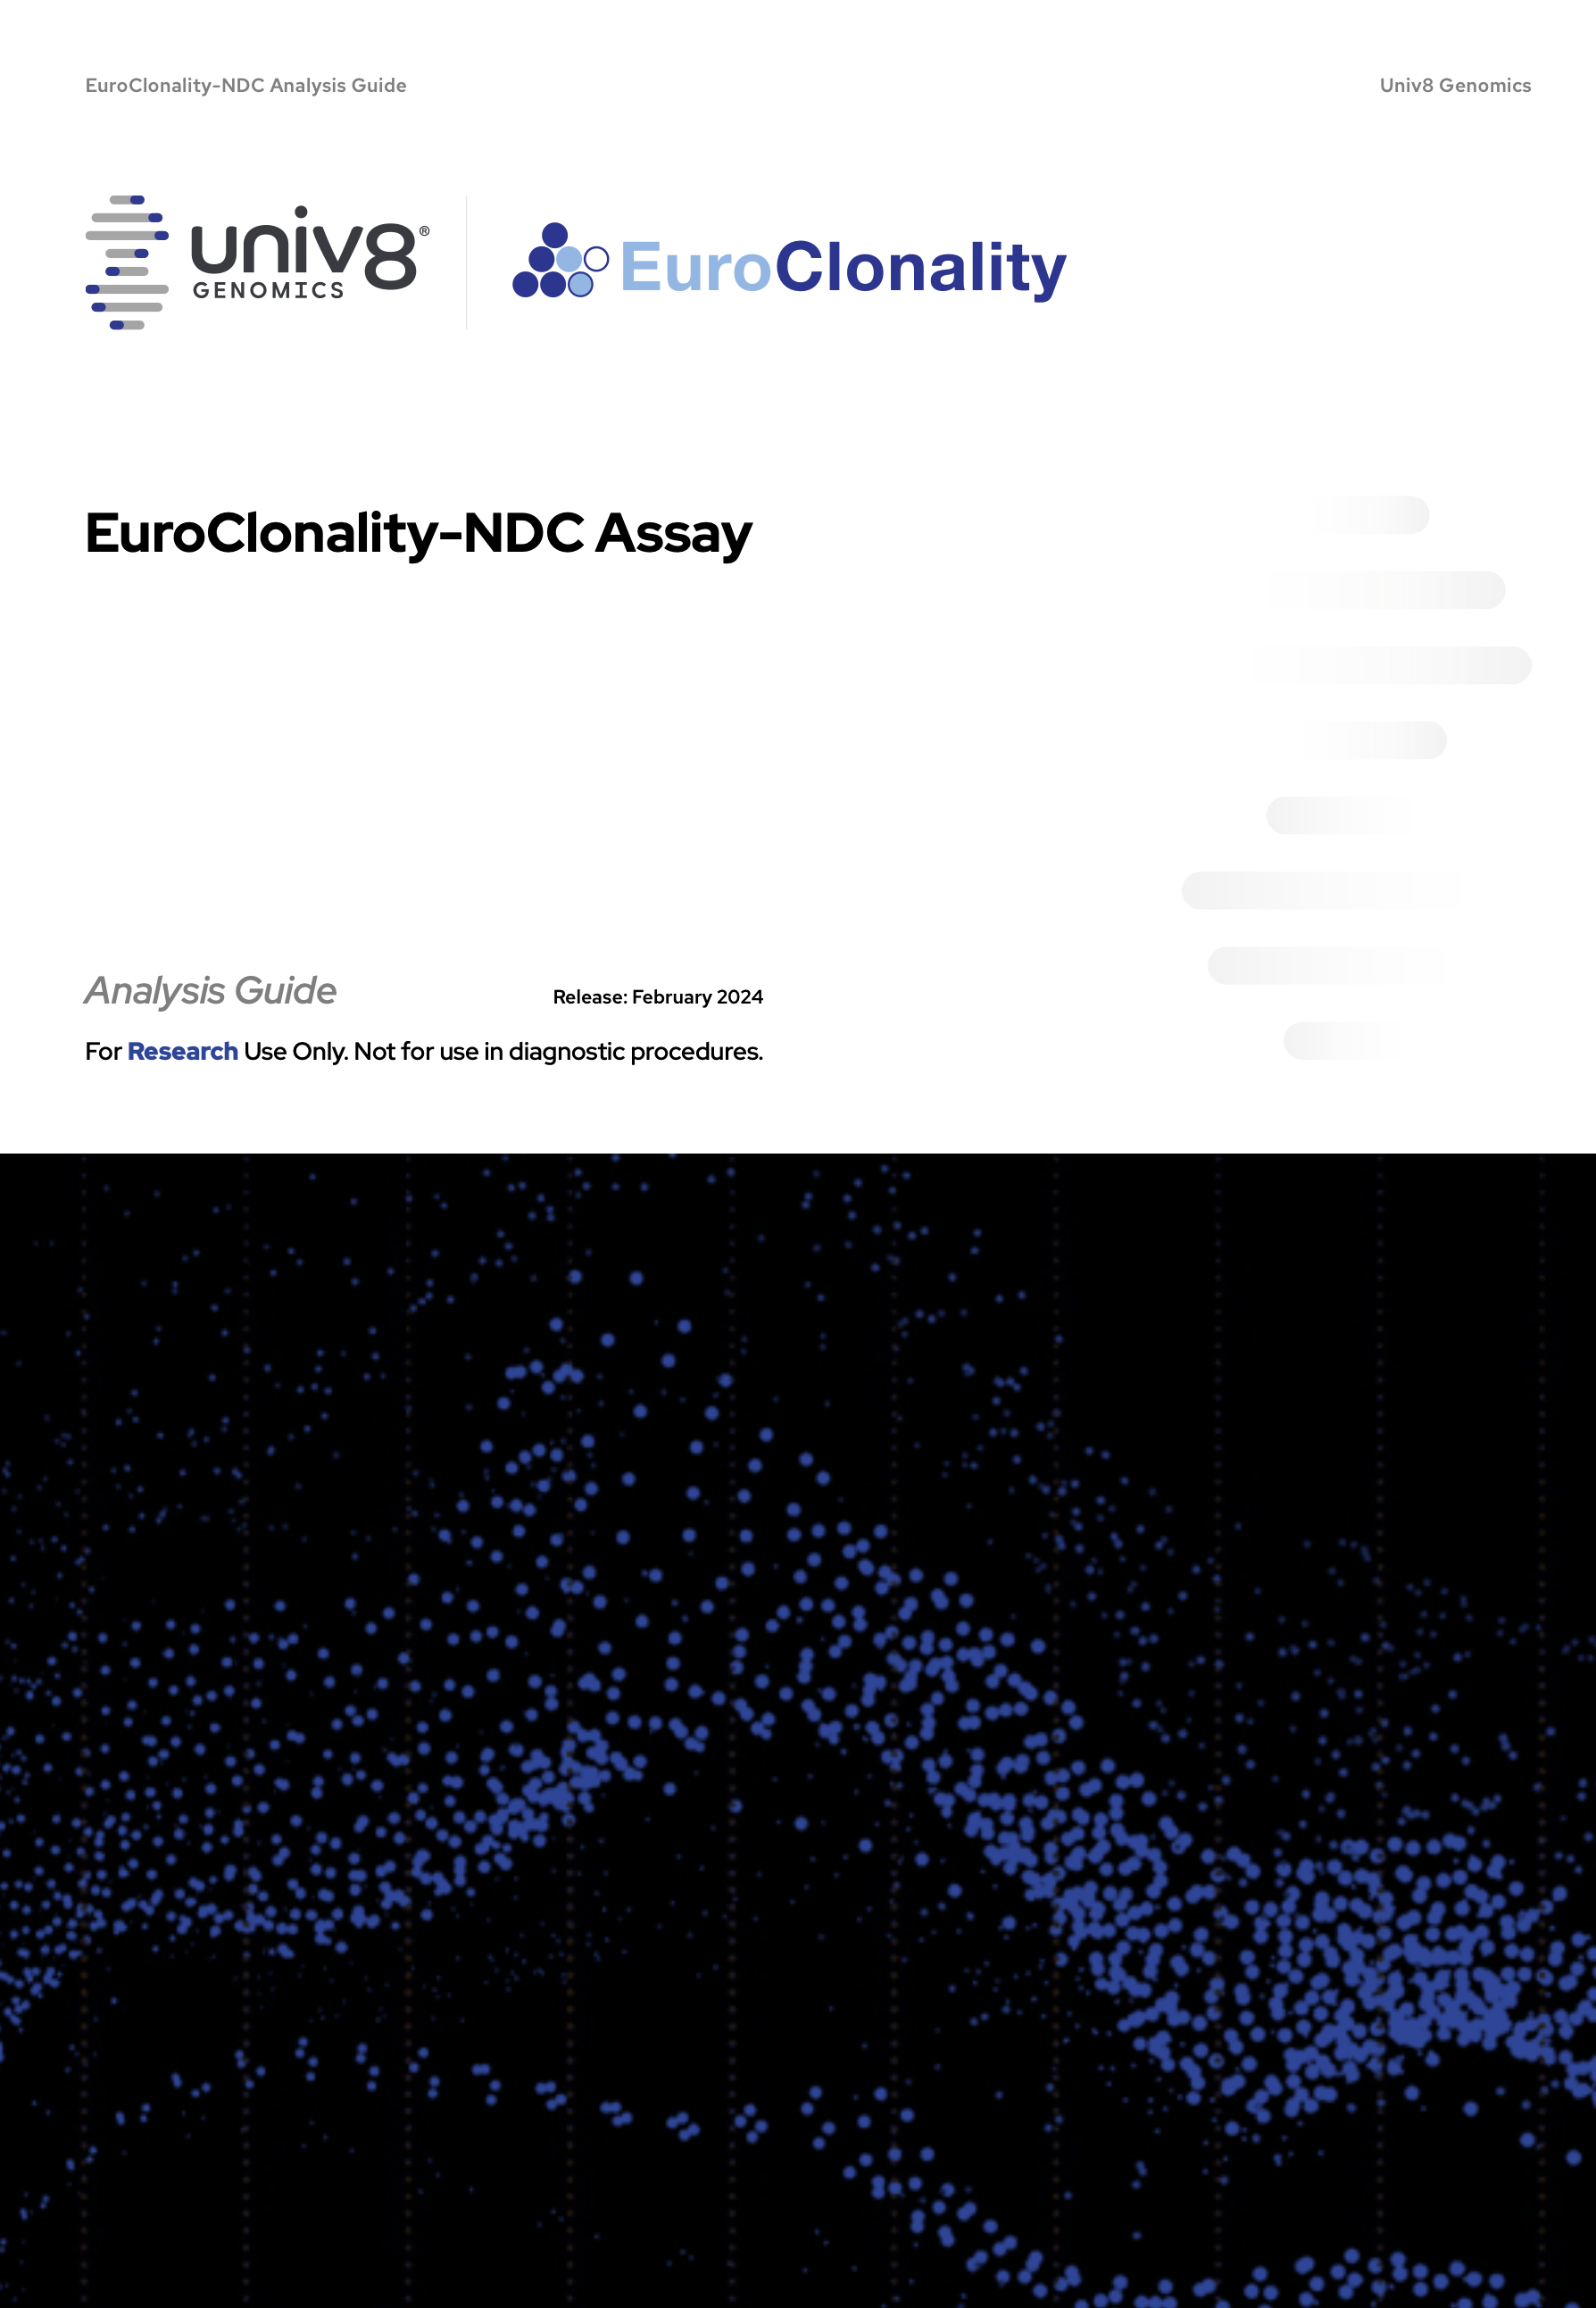 EuroClonality-NDC analysis guide